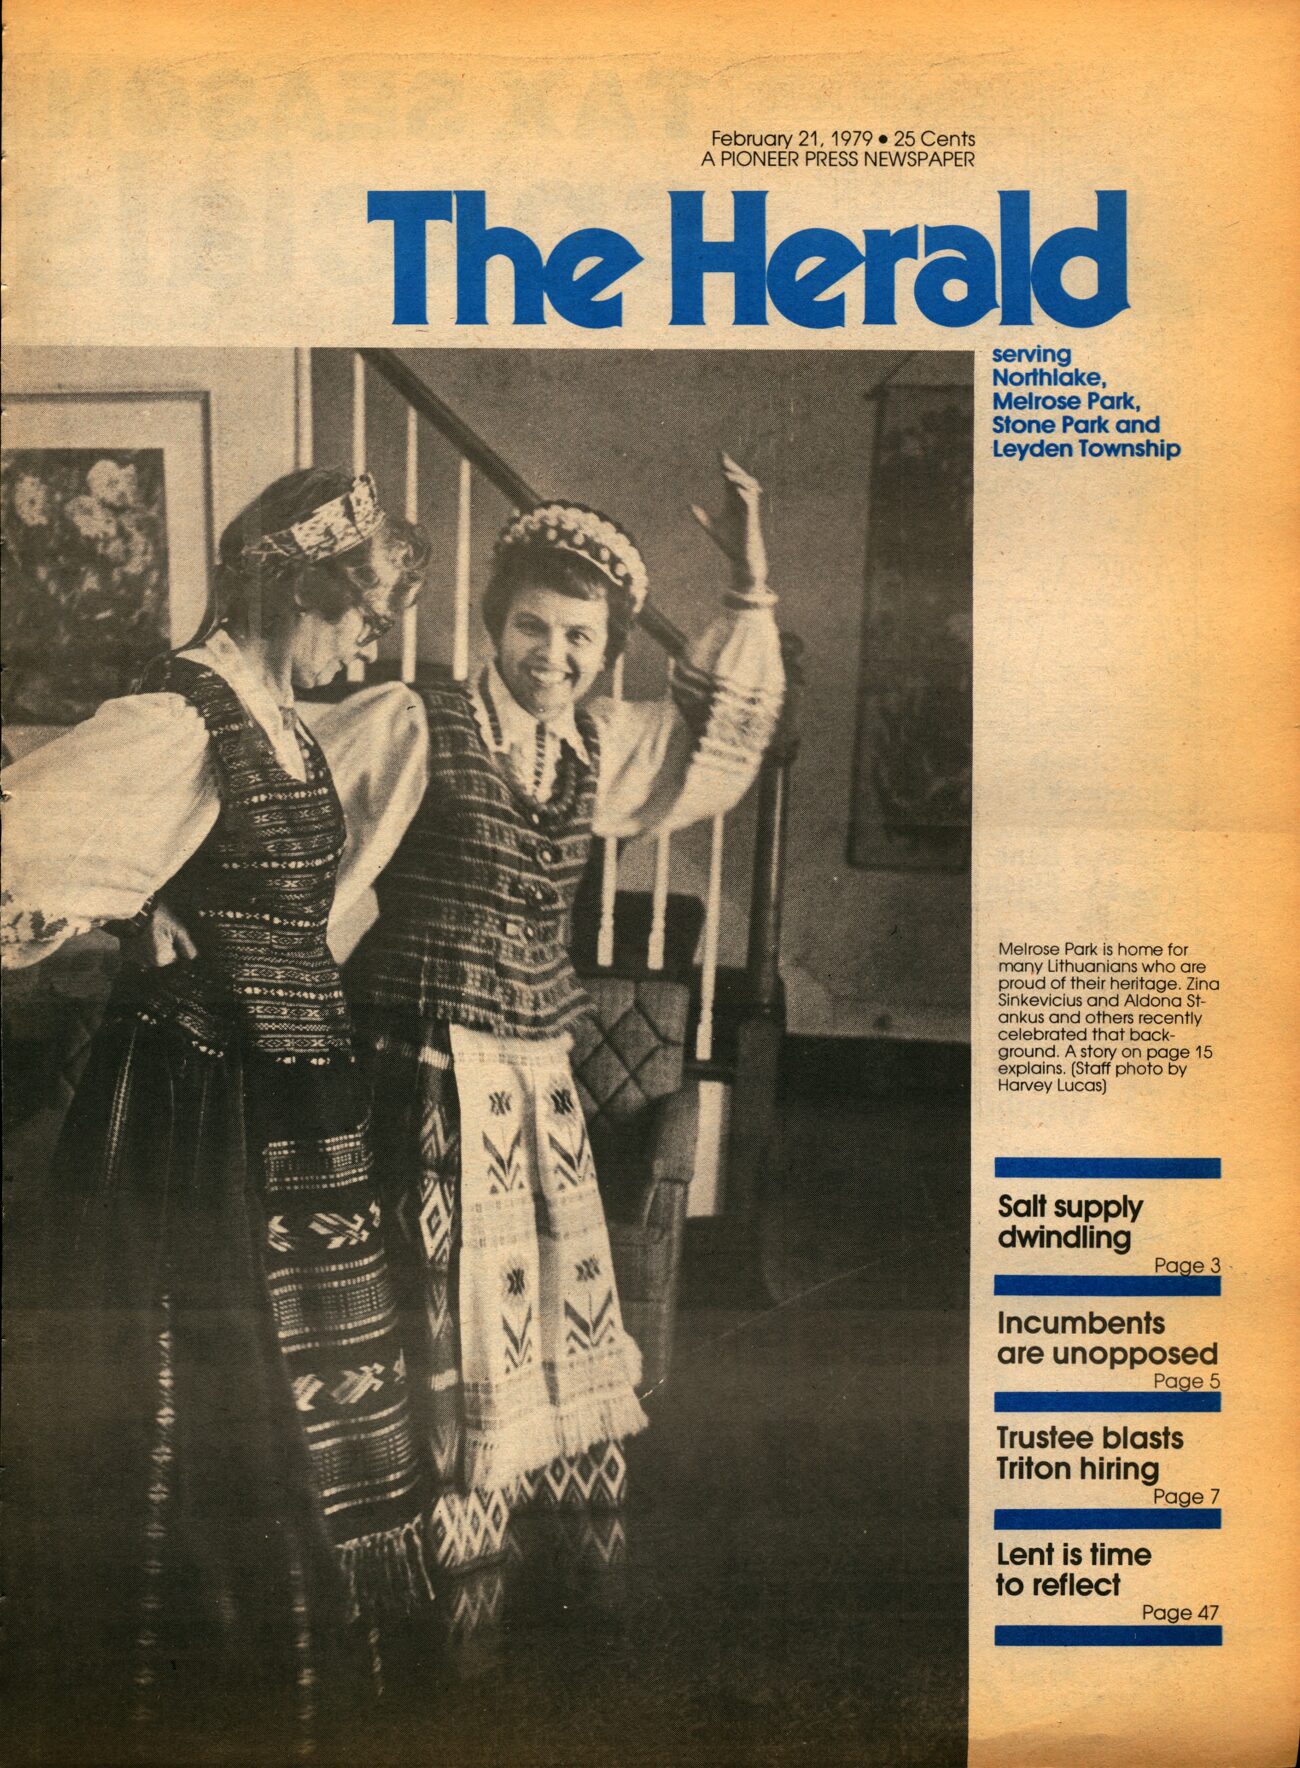 The Herald – 19790221